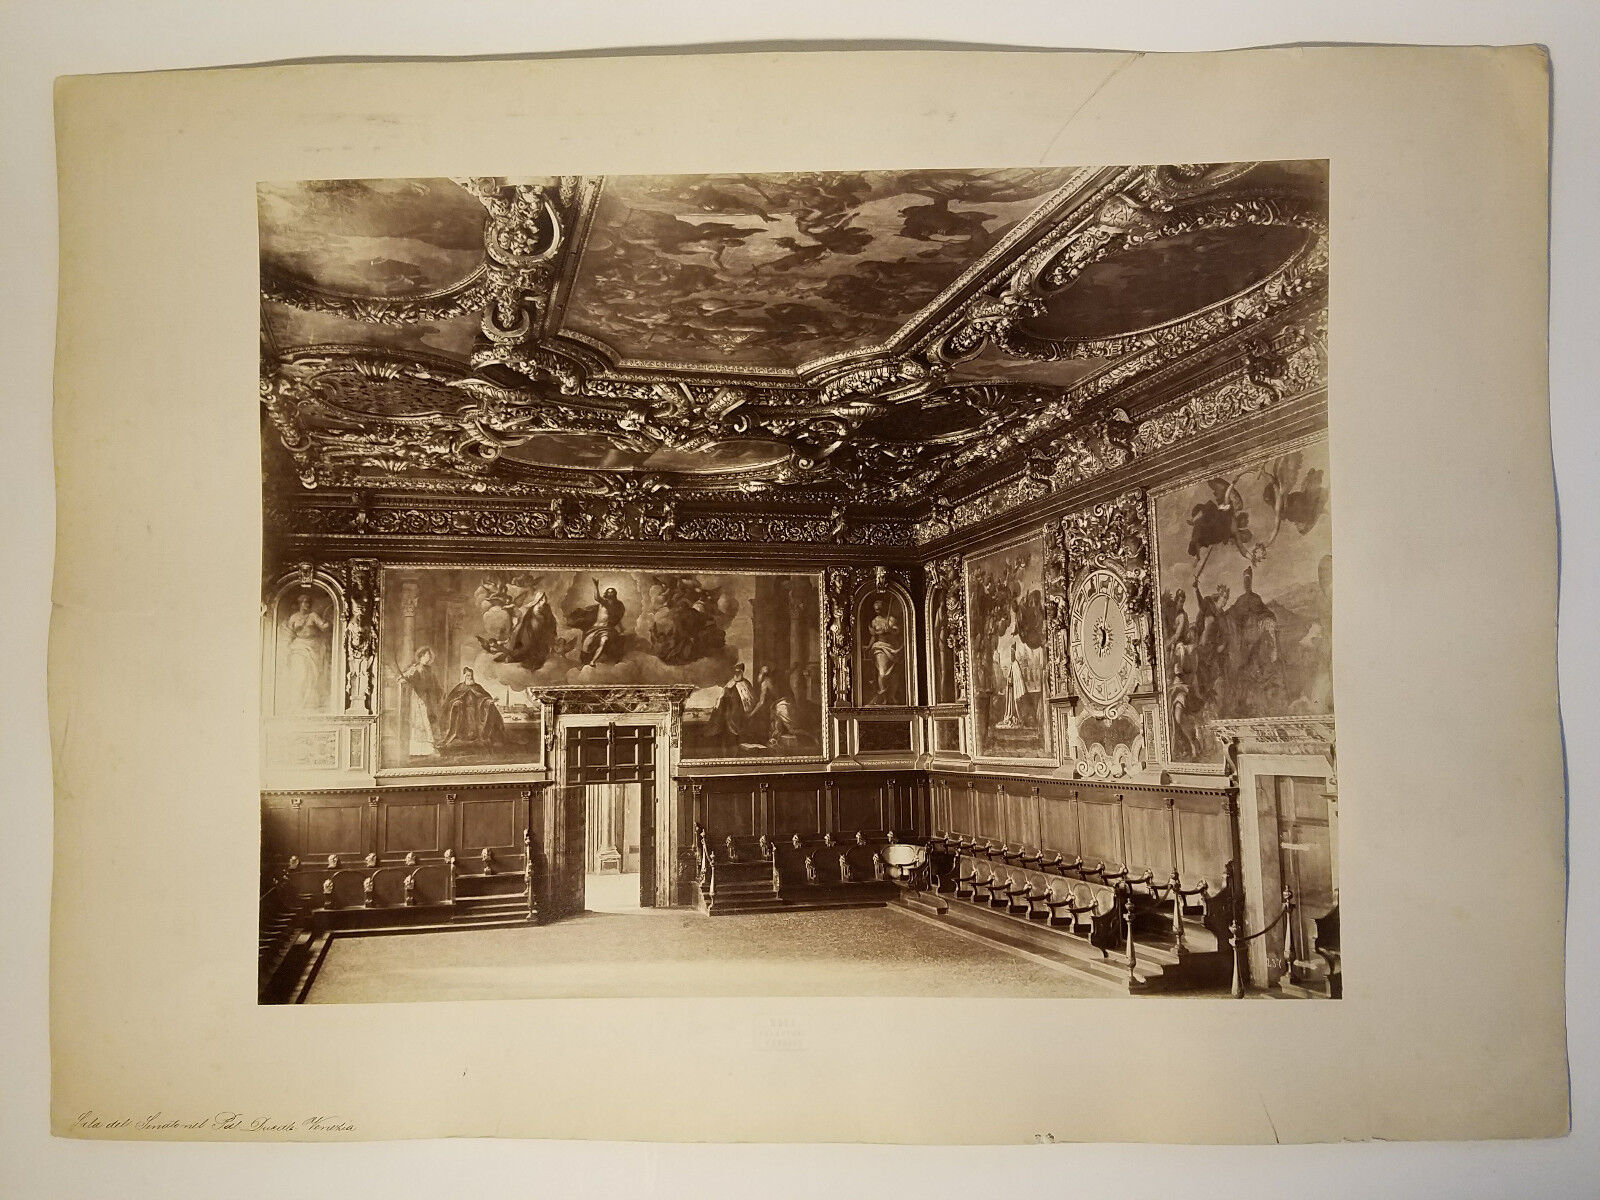 c.1870 MASSIVE CARLO NAYA PHOTO 41 X 53 CM DOGE'S PALACE SENATE HALL VENICE IT